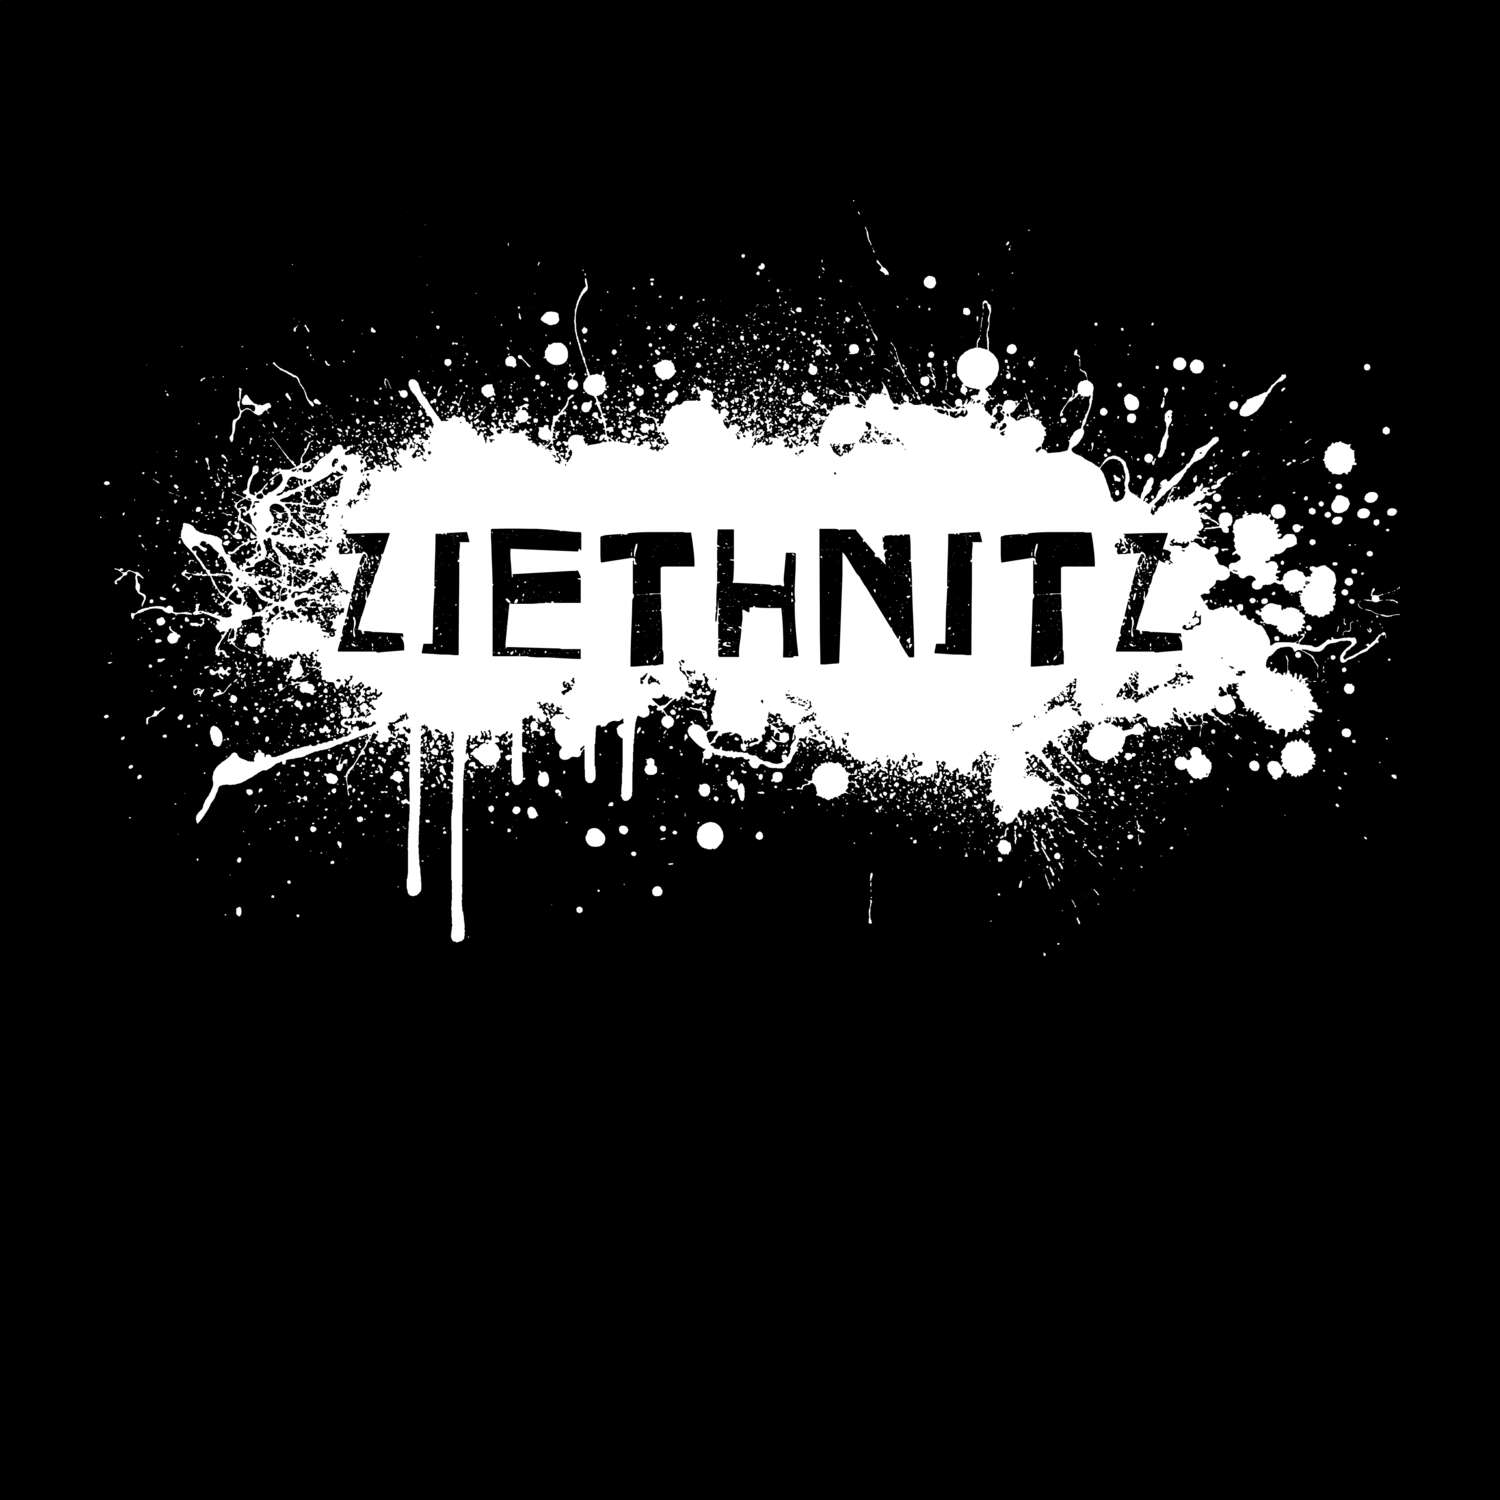 Ziethnitz T-Shirt »Paint Splash Punk«